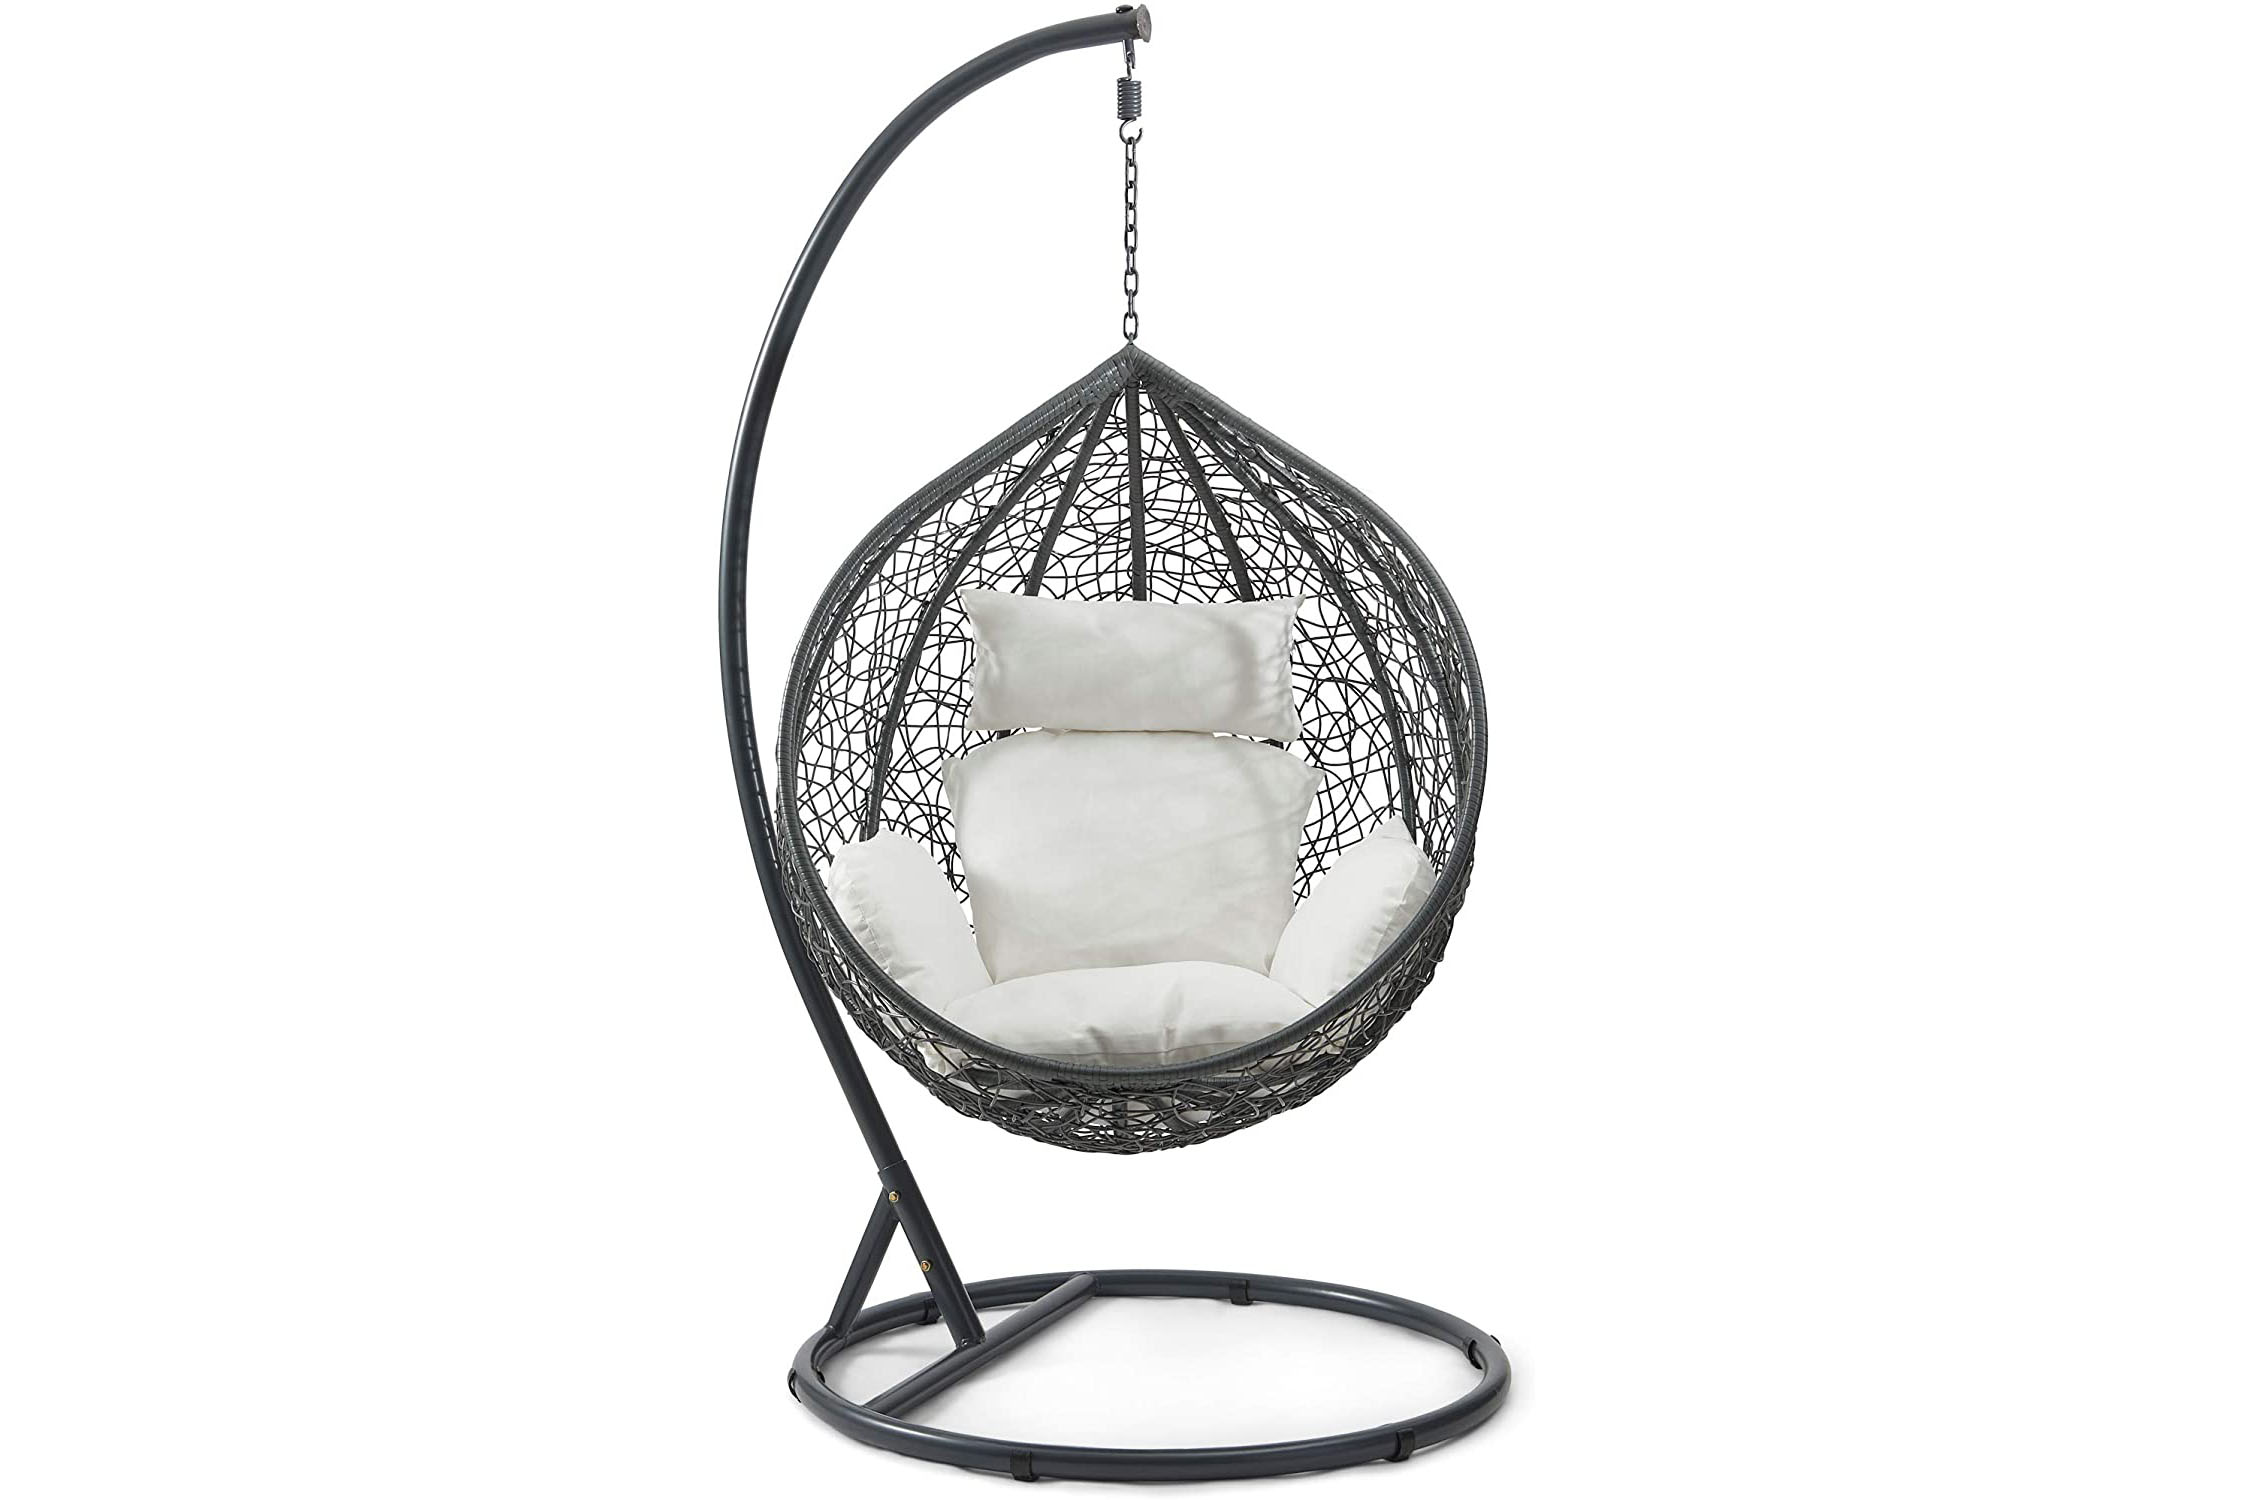 KD vendita Online Rattan Hanging Patio Swing Egg Chair mobili da giardino in vimini sedia da esterno